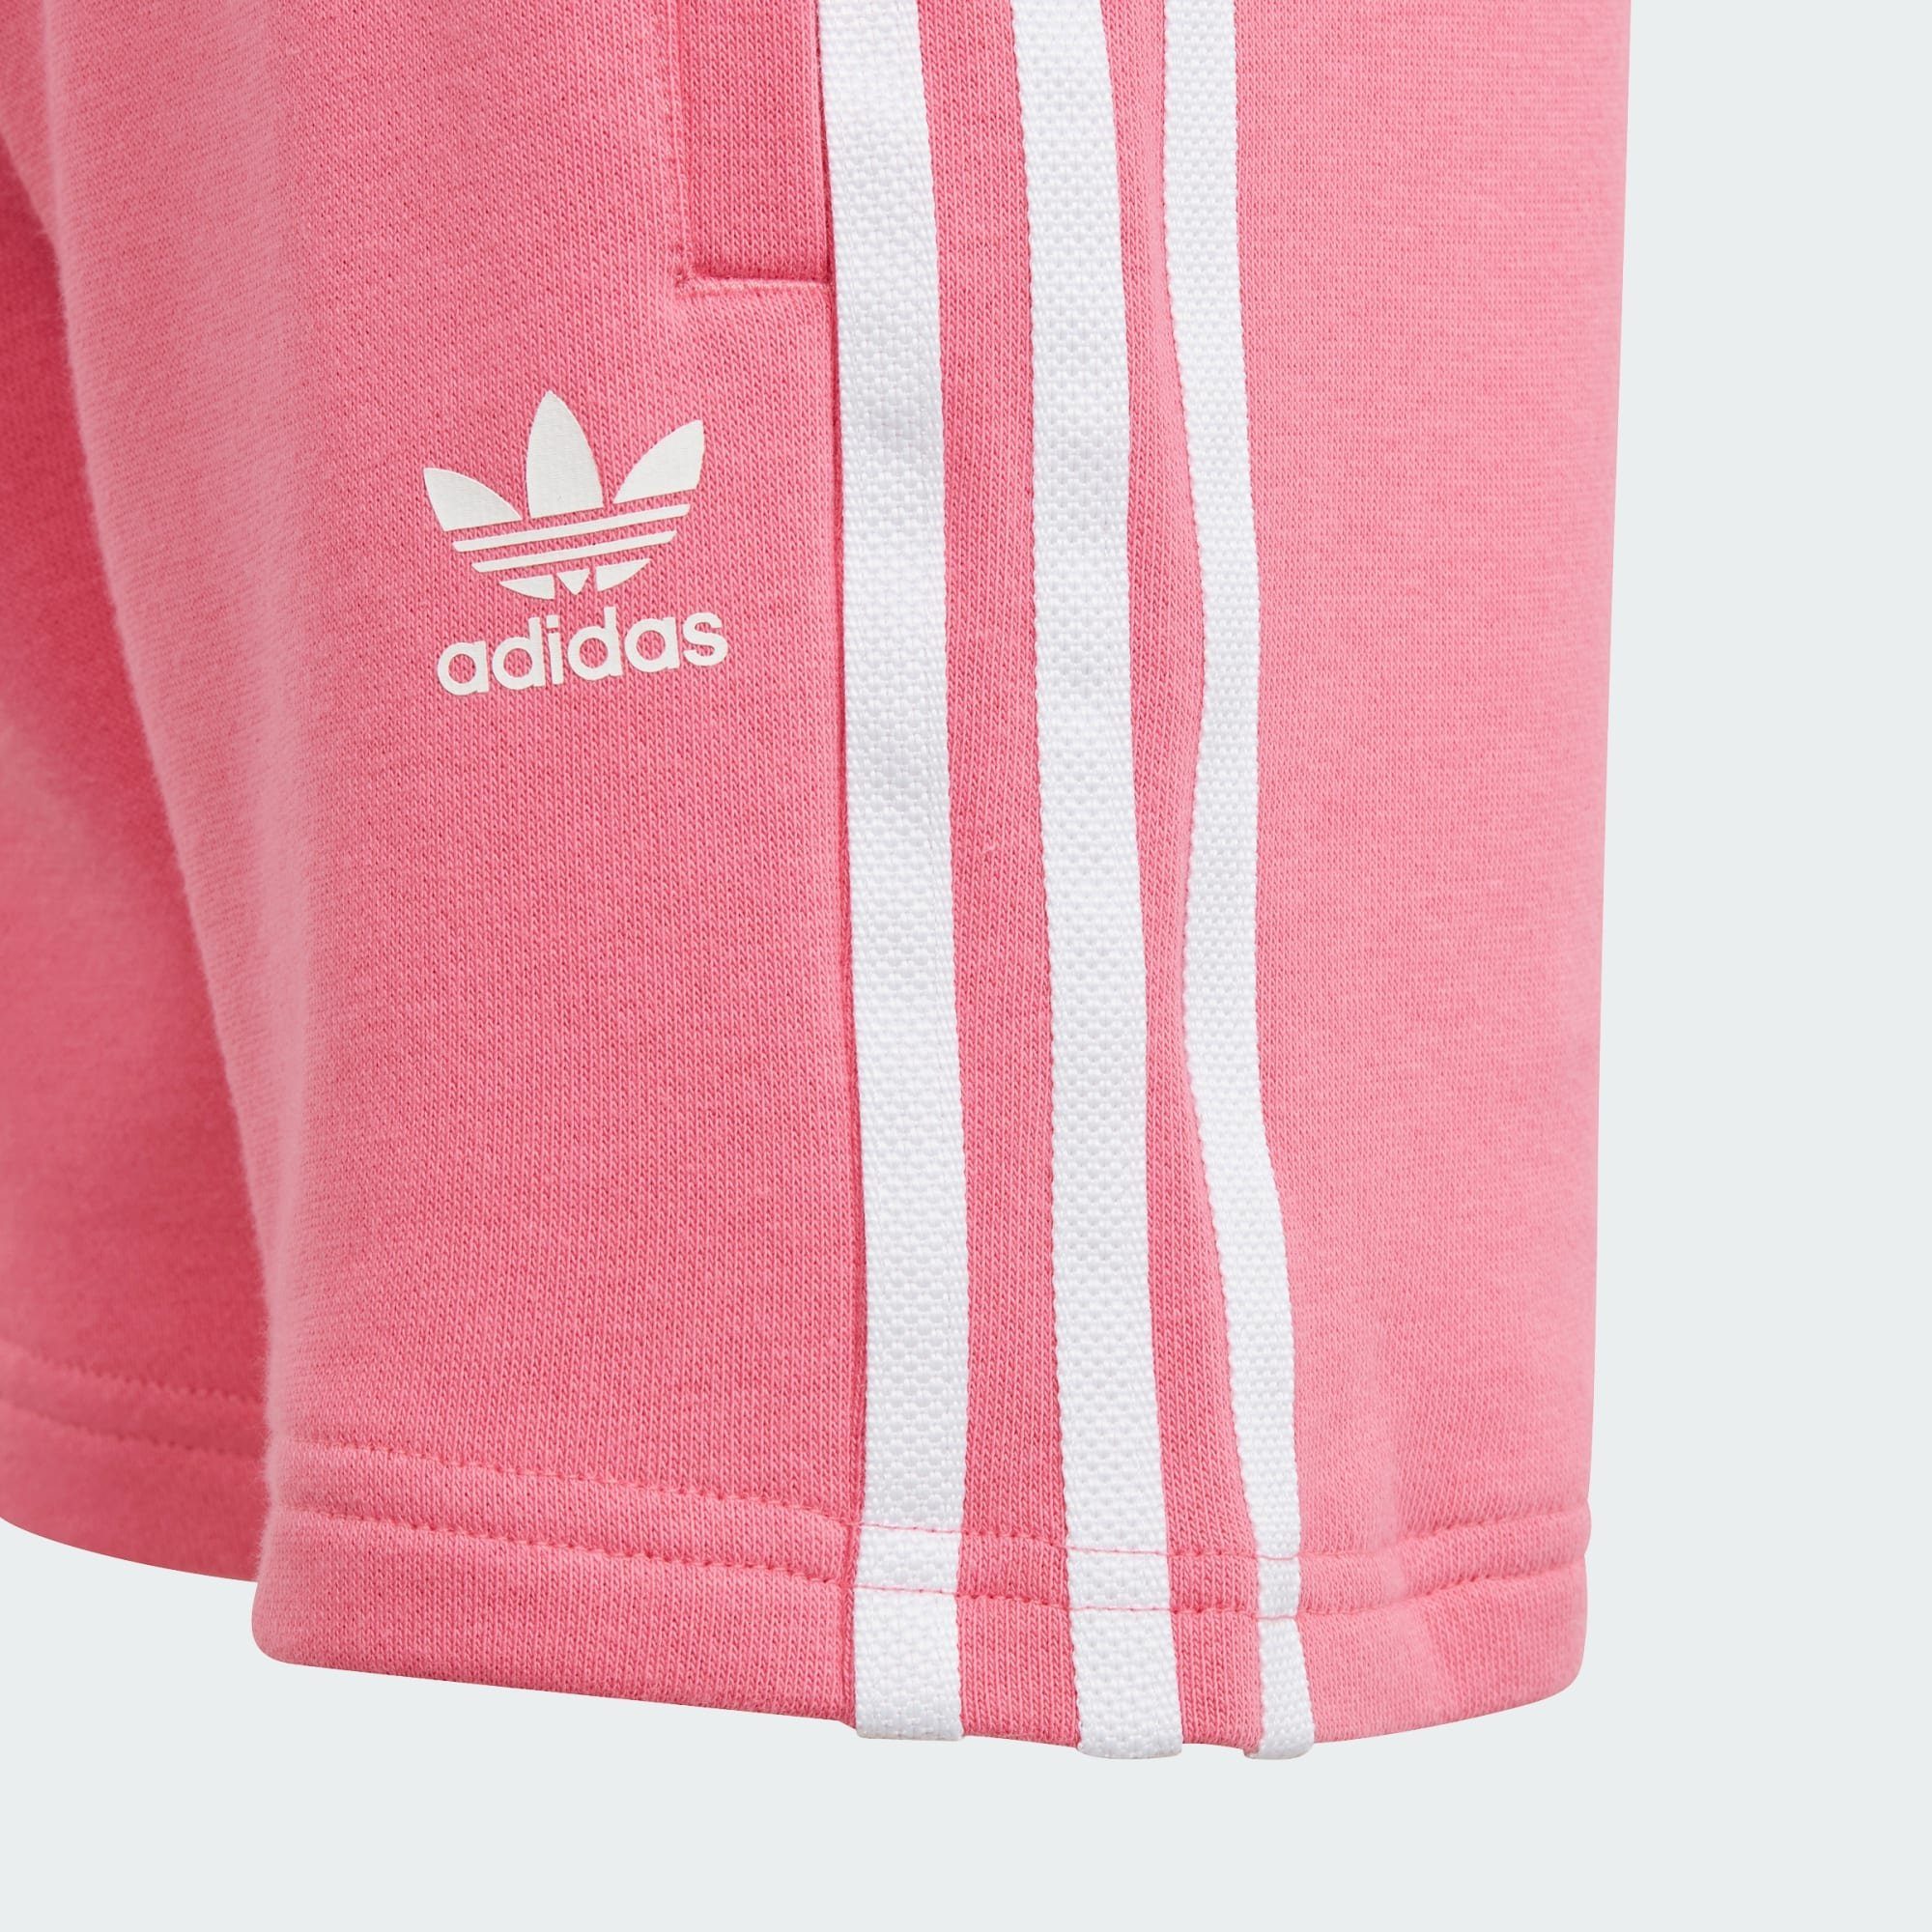 adidas Originals SHORTS Pink UND T-SHIRT ADICOLOR Trainingsanzug SET Fusion